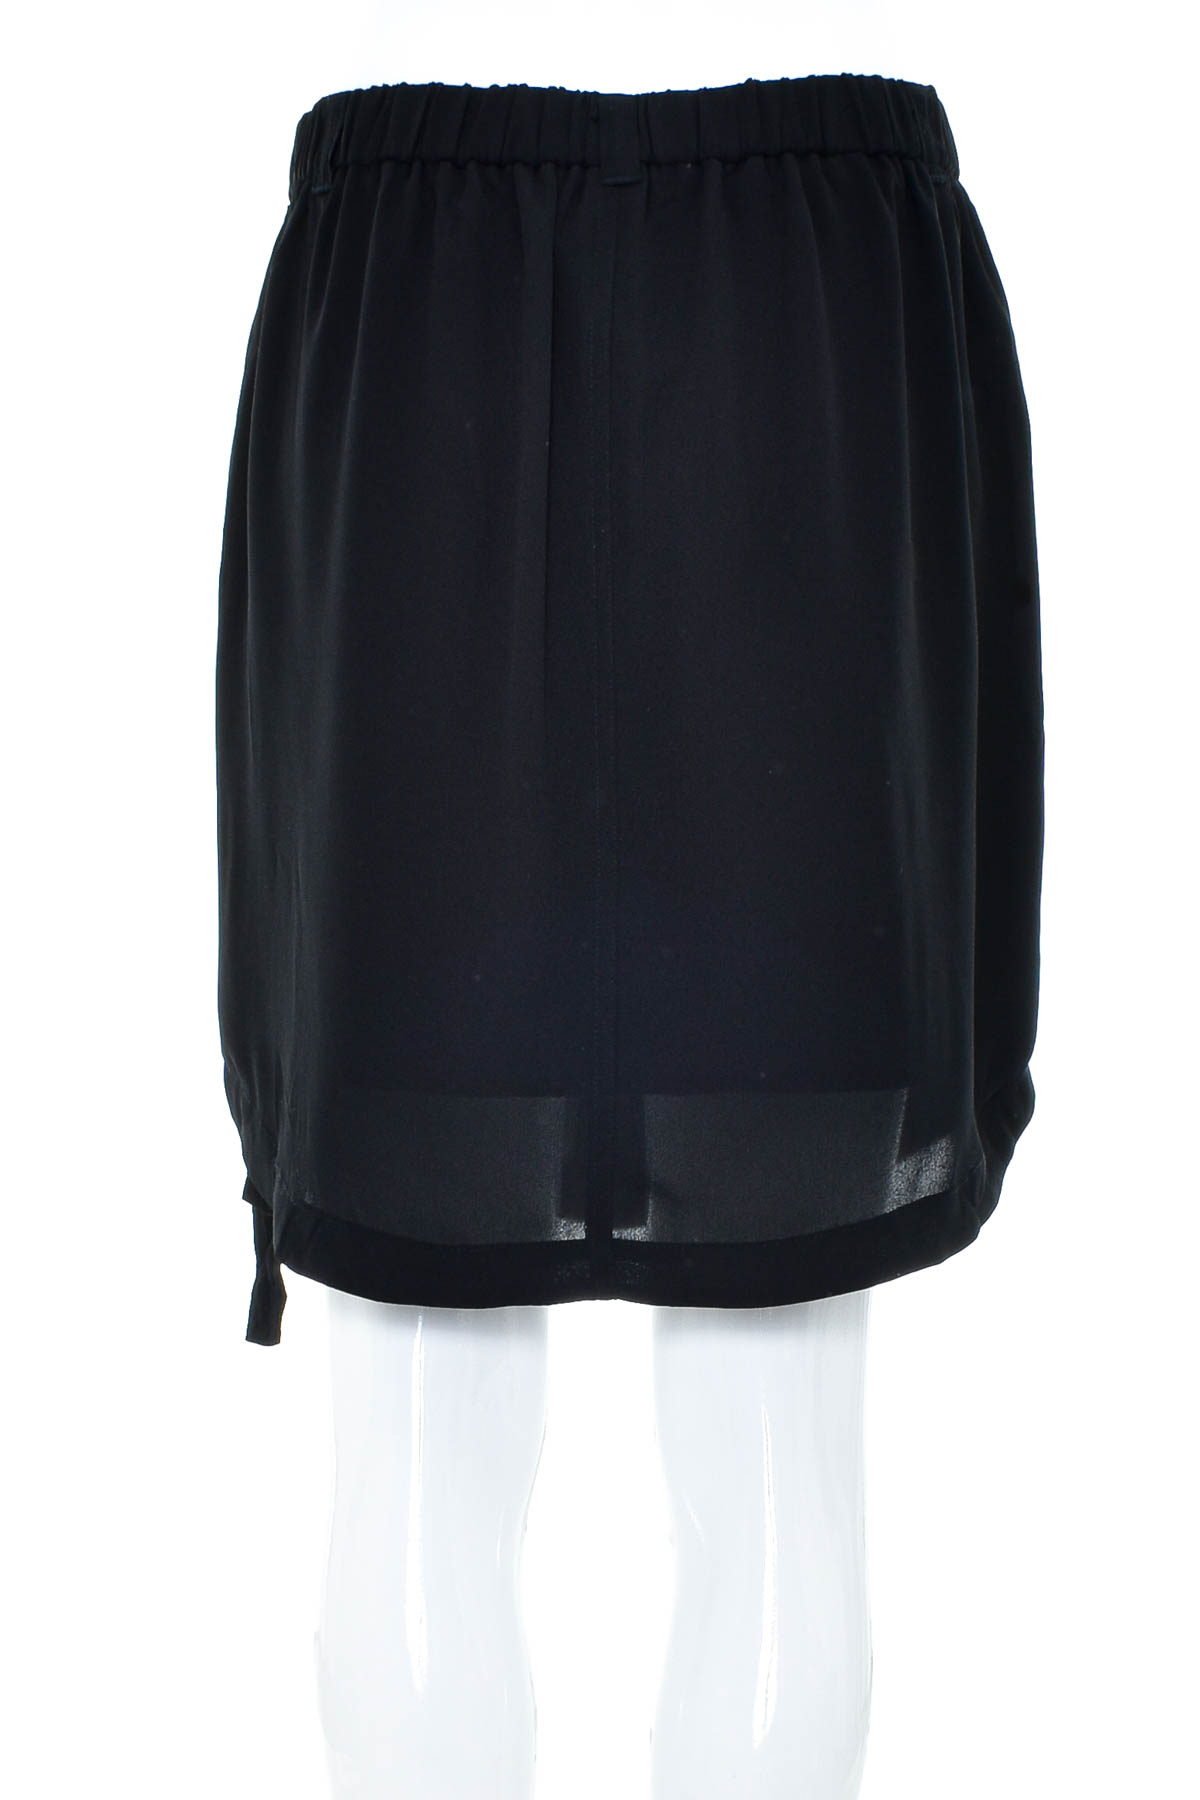 Skirt - ANN TAYLOR LOFT - 1